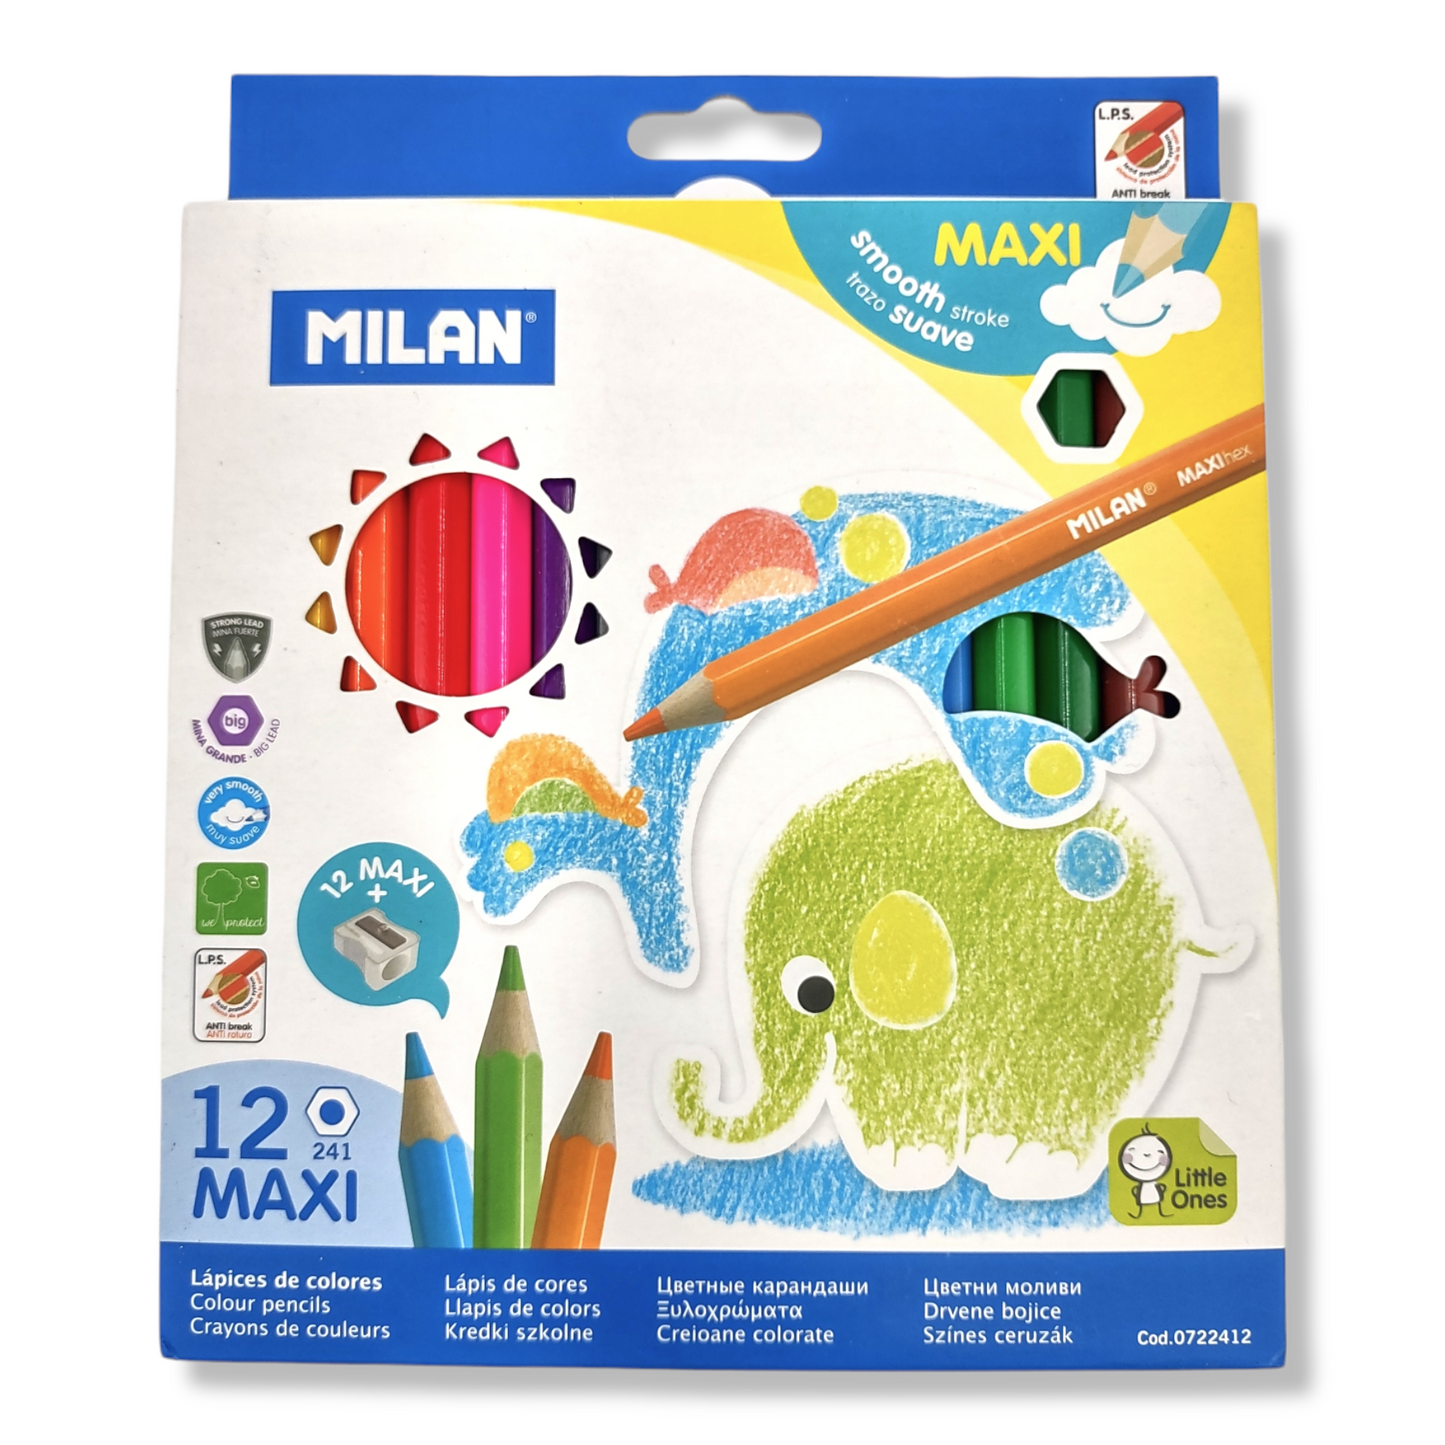 Milan MAXI-Hex Colored Pencils Pack of 12 + Sharpener Kids Arts and Crafts Pencils - Anti Break Lead